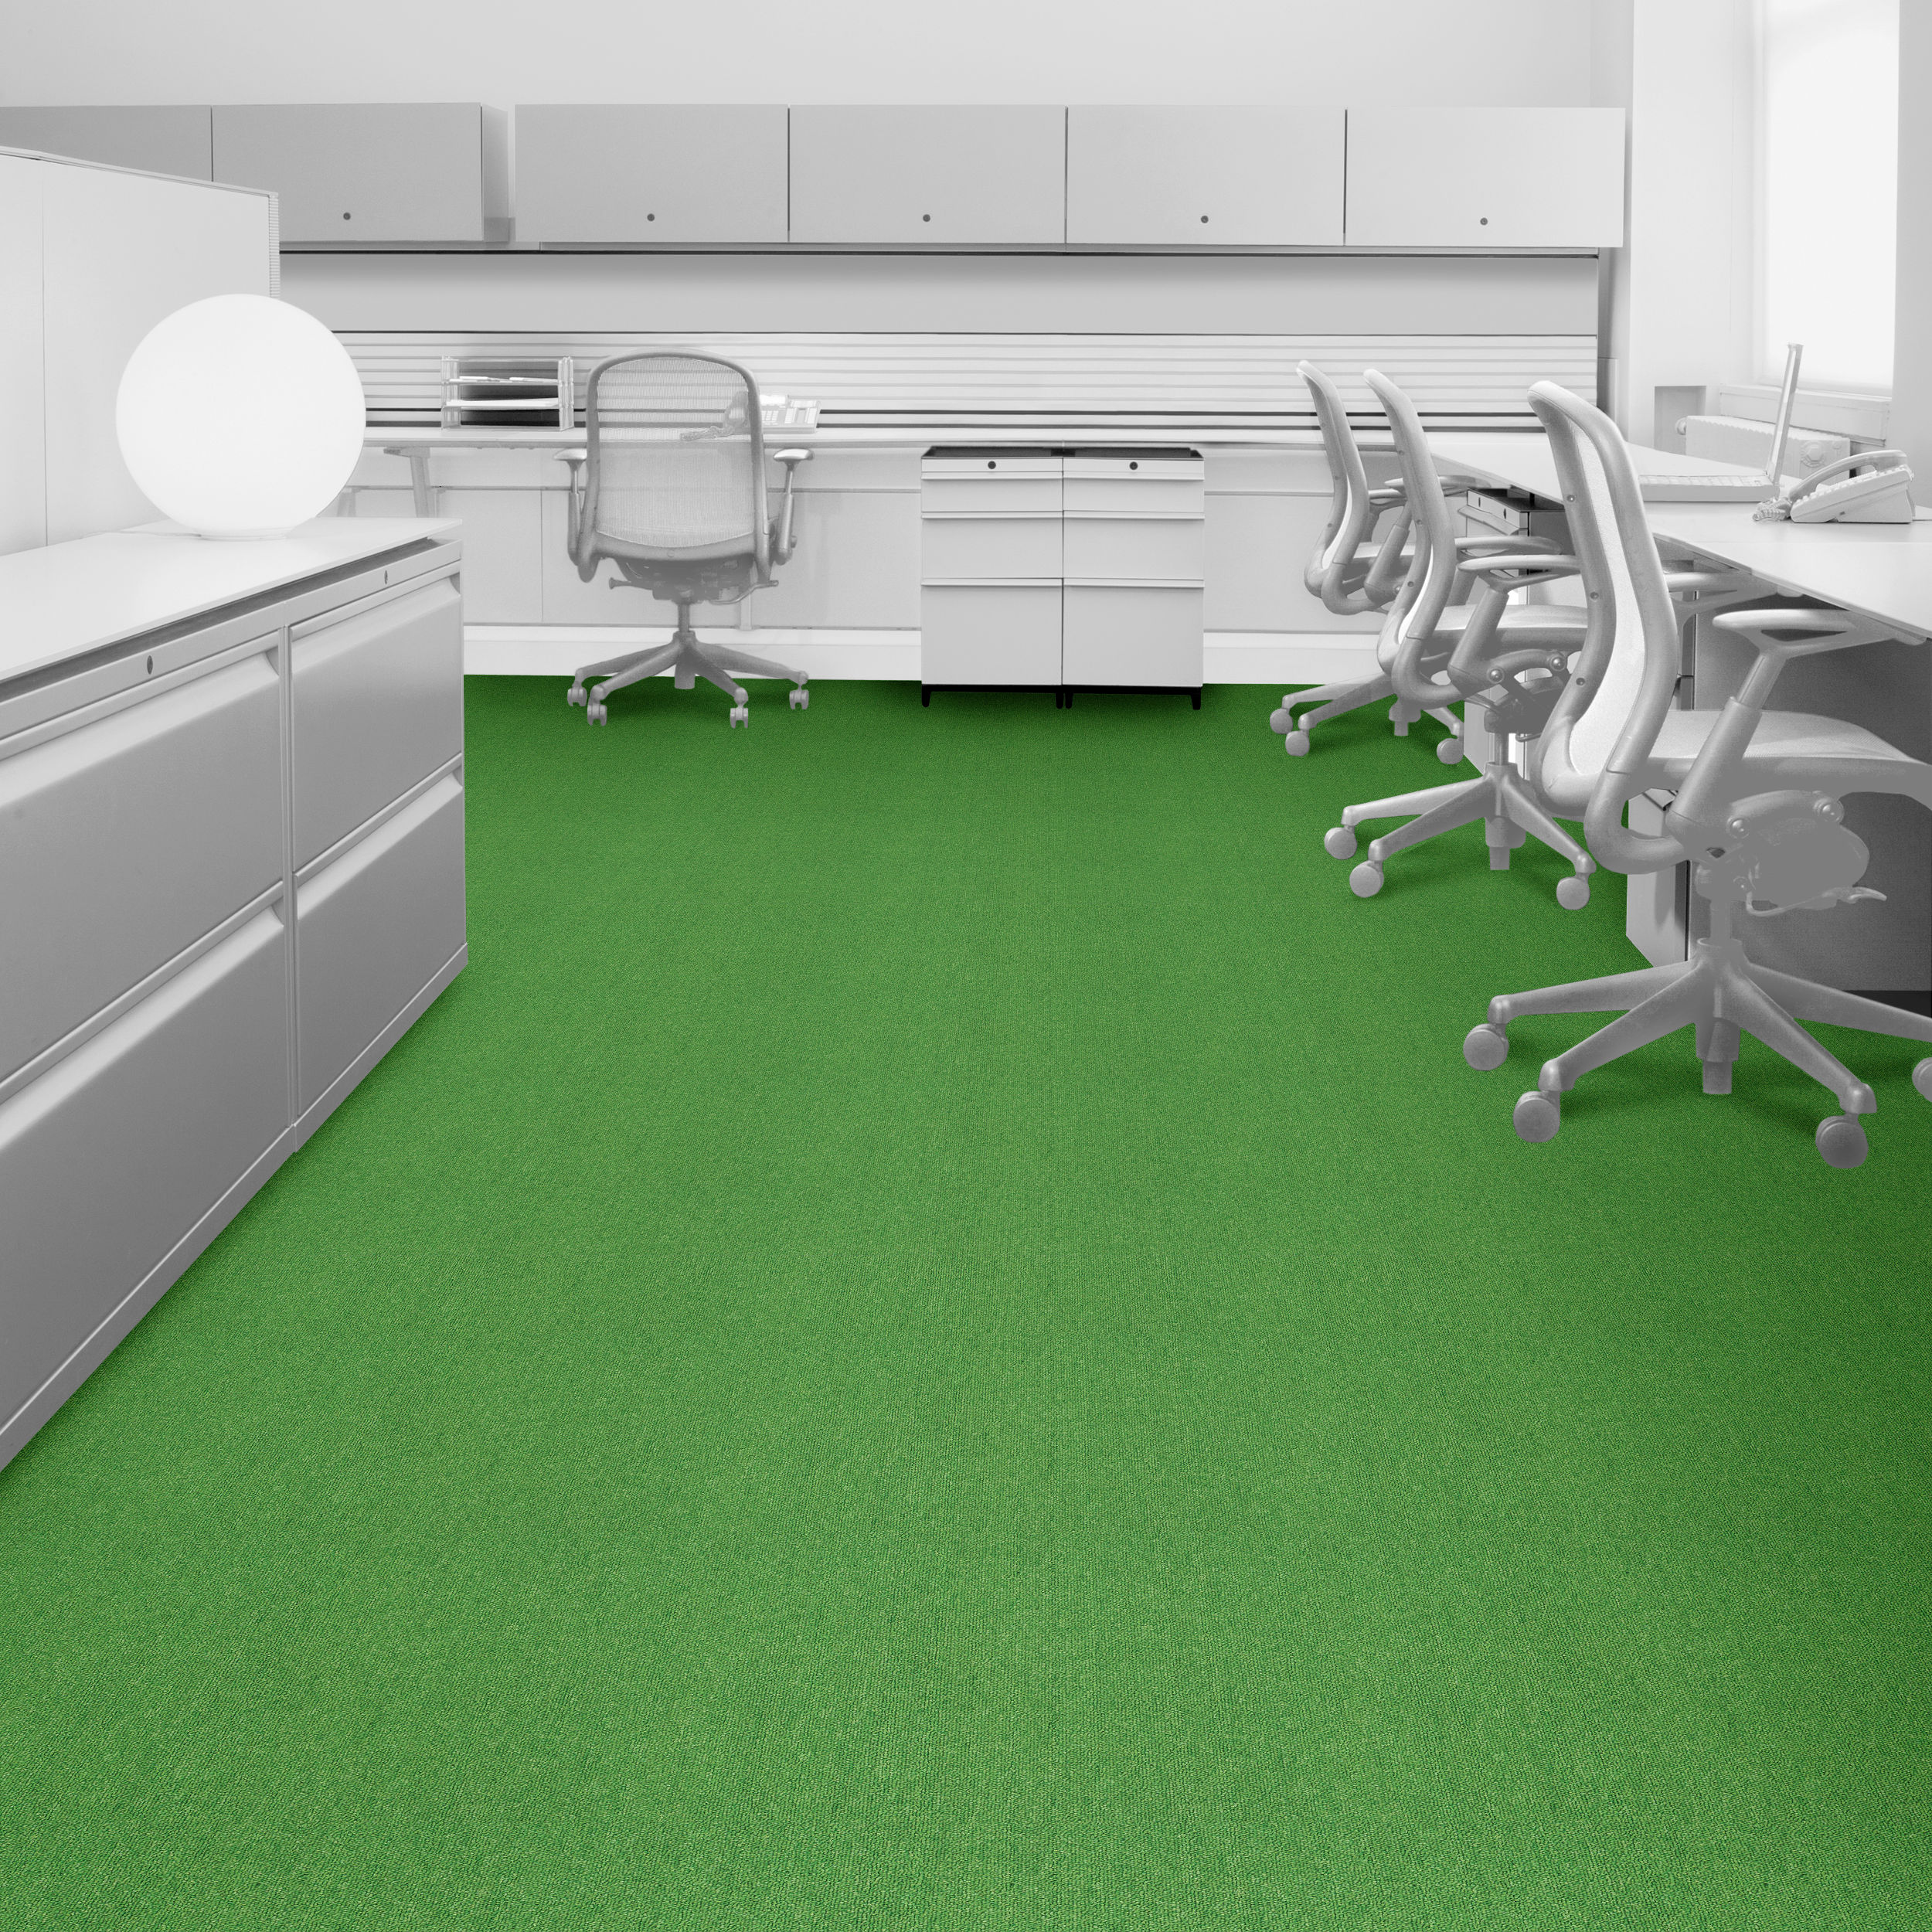 Interface Heuga 580 Carpet Tile - Poison variation in office setting.